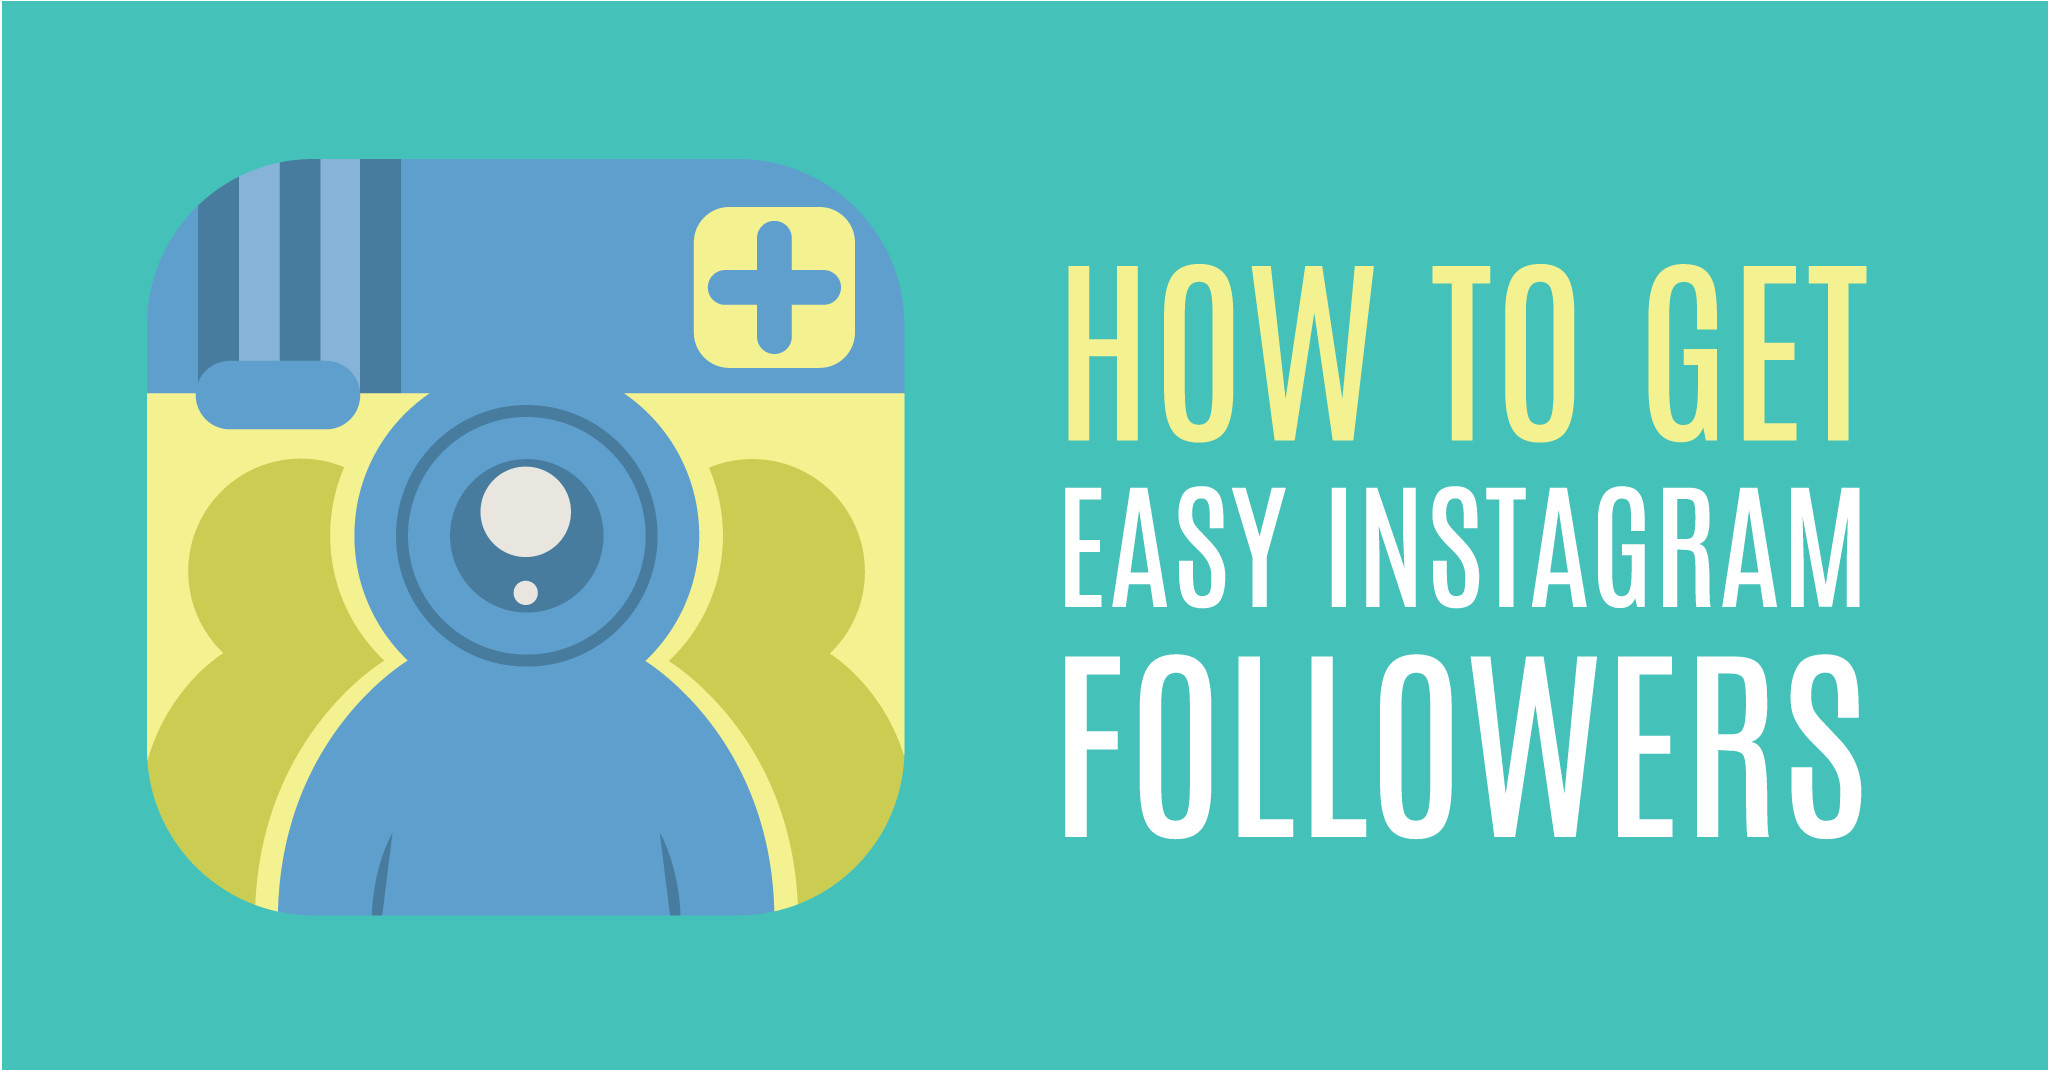 Dapatkan 1000 Followers Instagram Tertarget Tanpa Aplikasi Dengan 7 Cara Berikut!